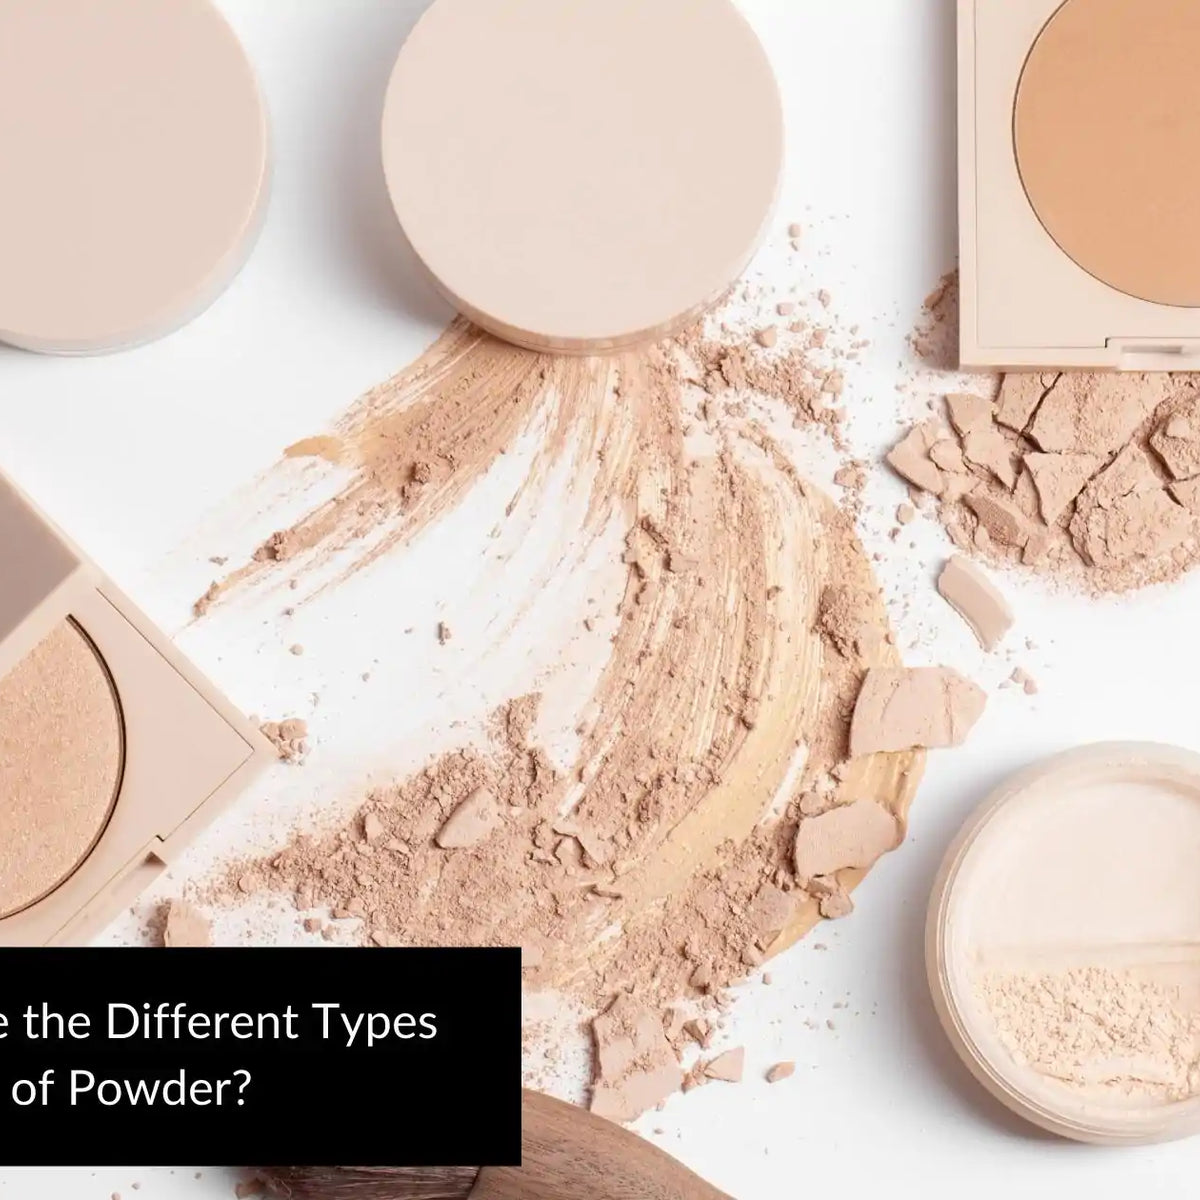 Tinted Face Powder: Lightweight Setting Powder – Jones Road